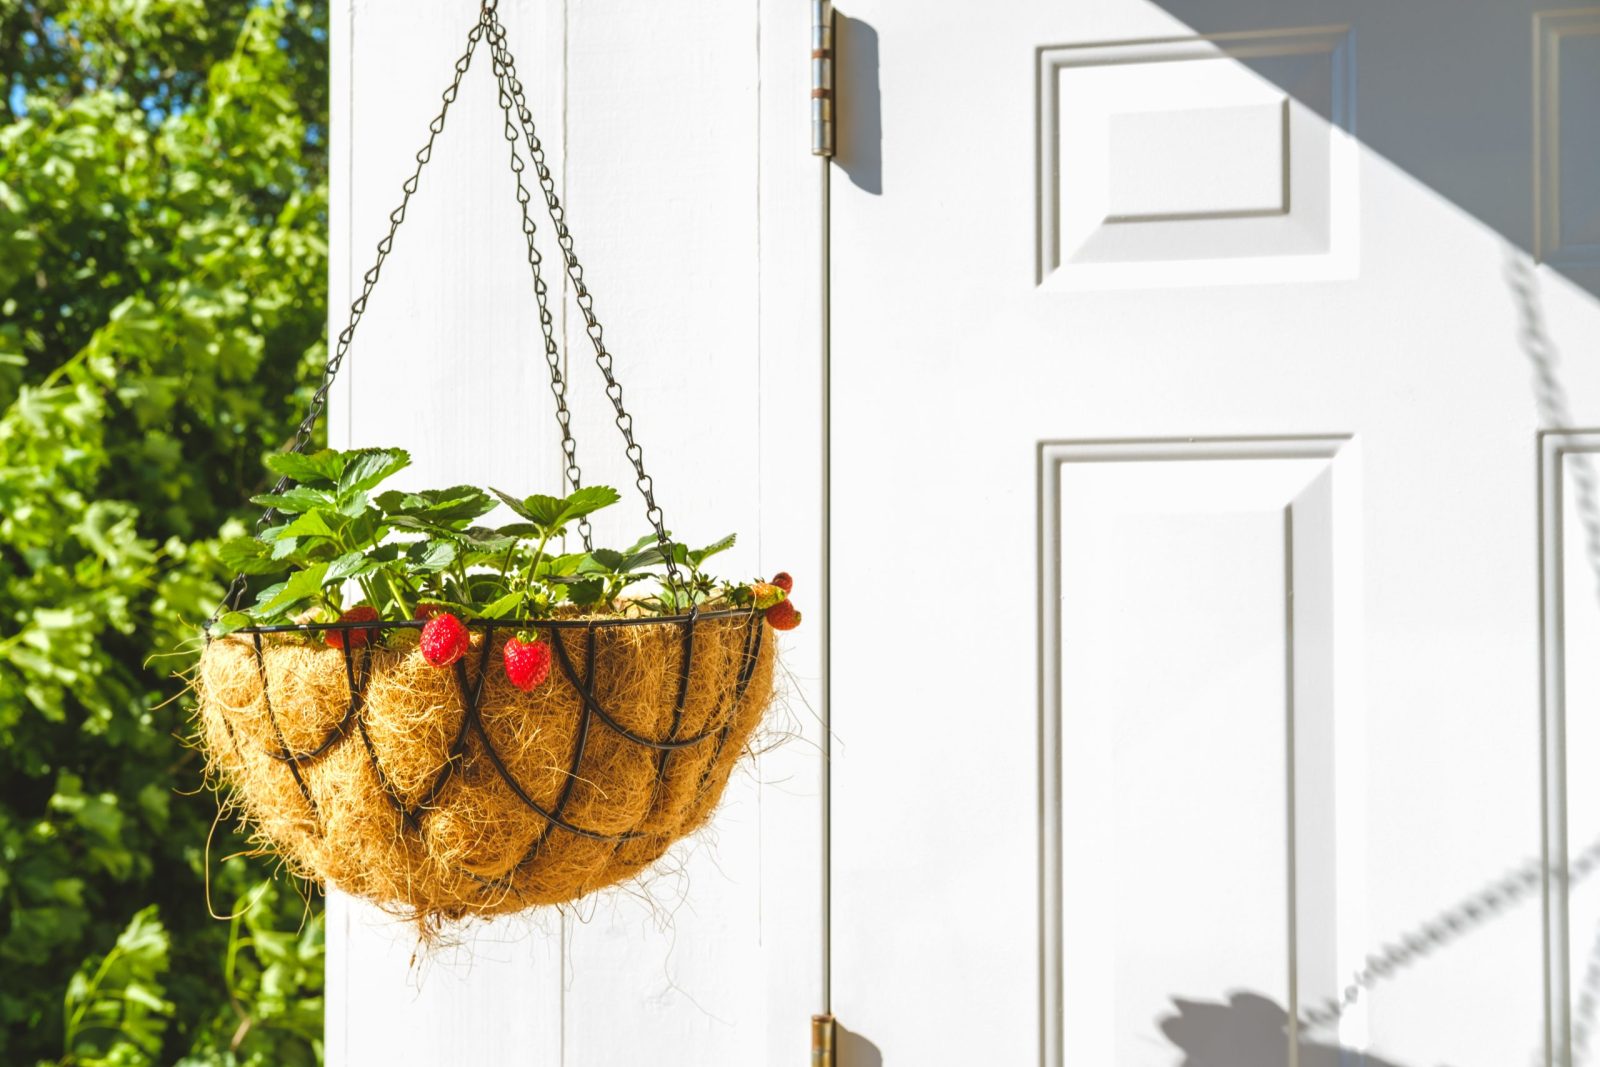 Strawberry in hanging basket